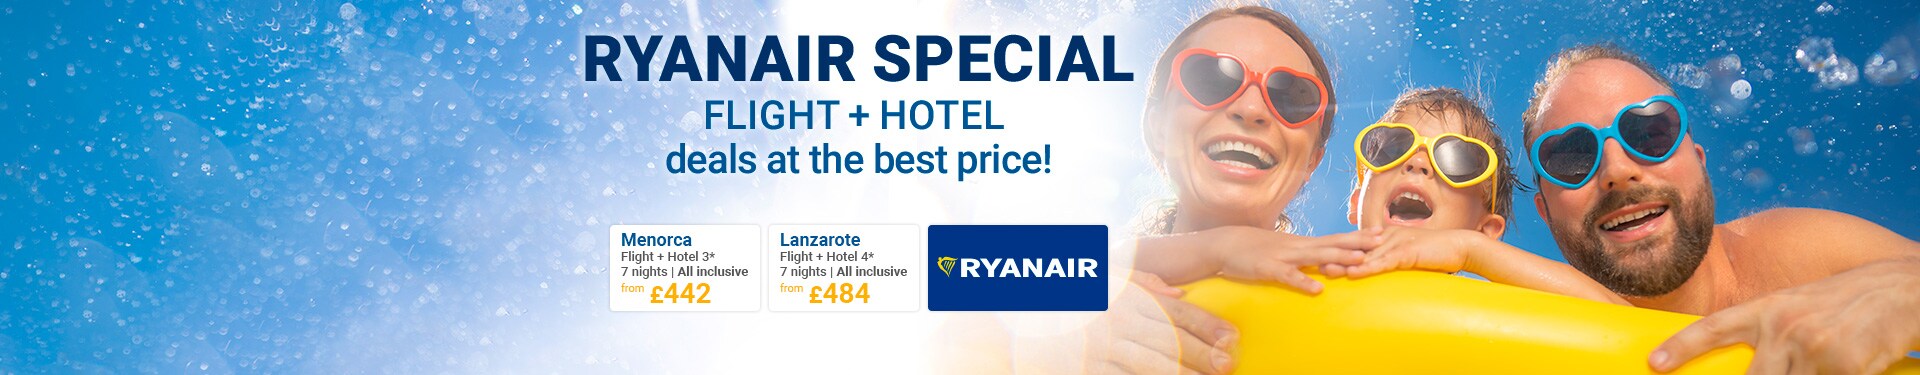 Ryanair Special